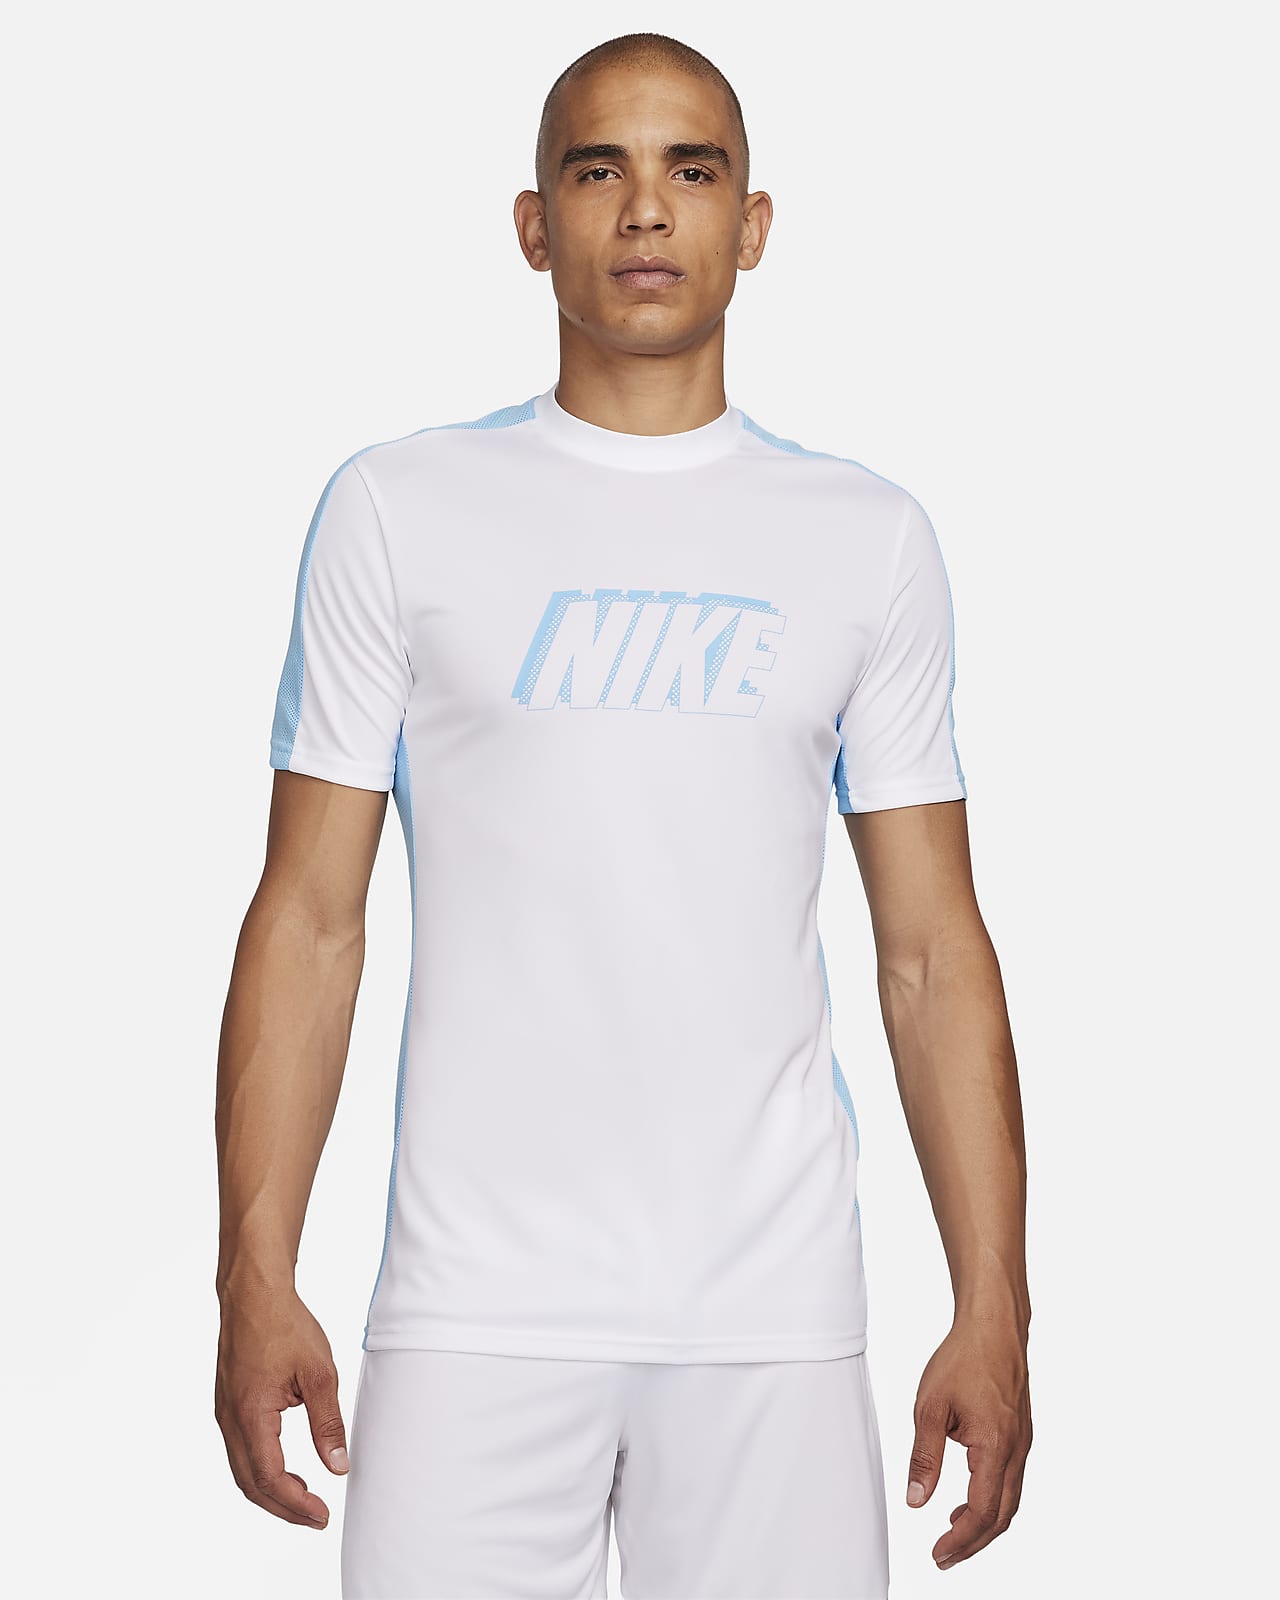 Men\'s Nike Soccer Short-Sleeve Top. Dri-FIT Academy